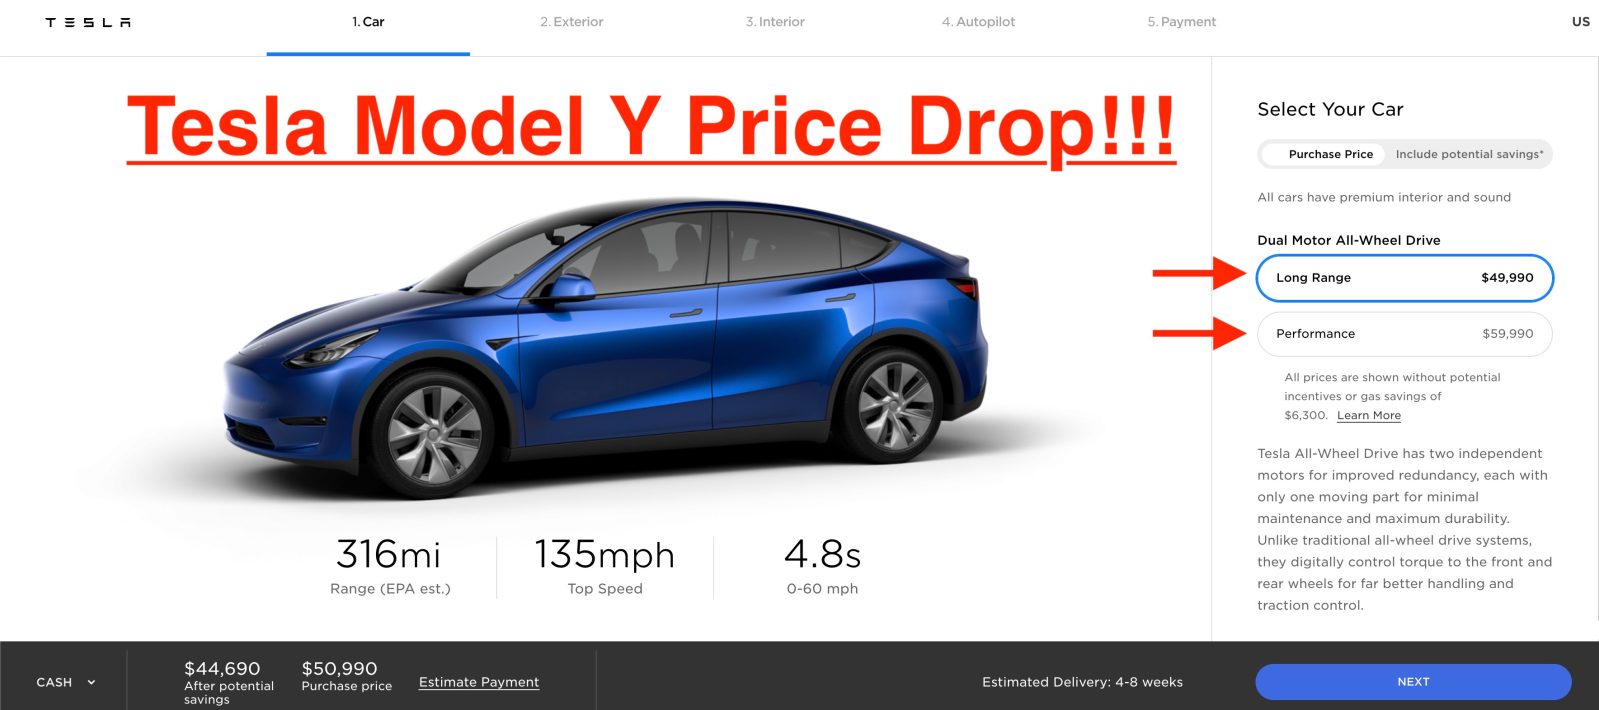 Tesla-Model-Y-price-drop-hero.jpg?quality=82&strip=all&w=1600